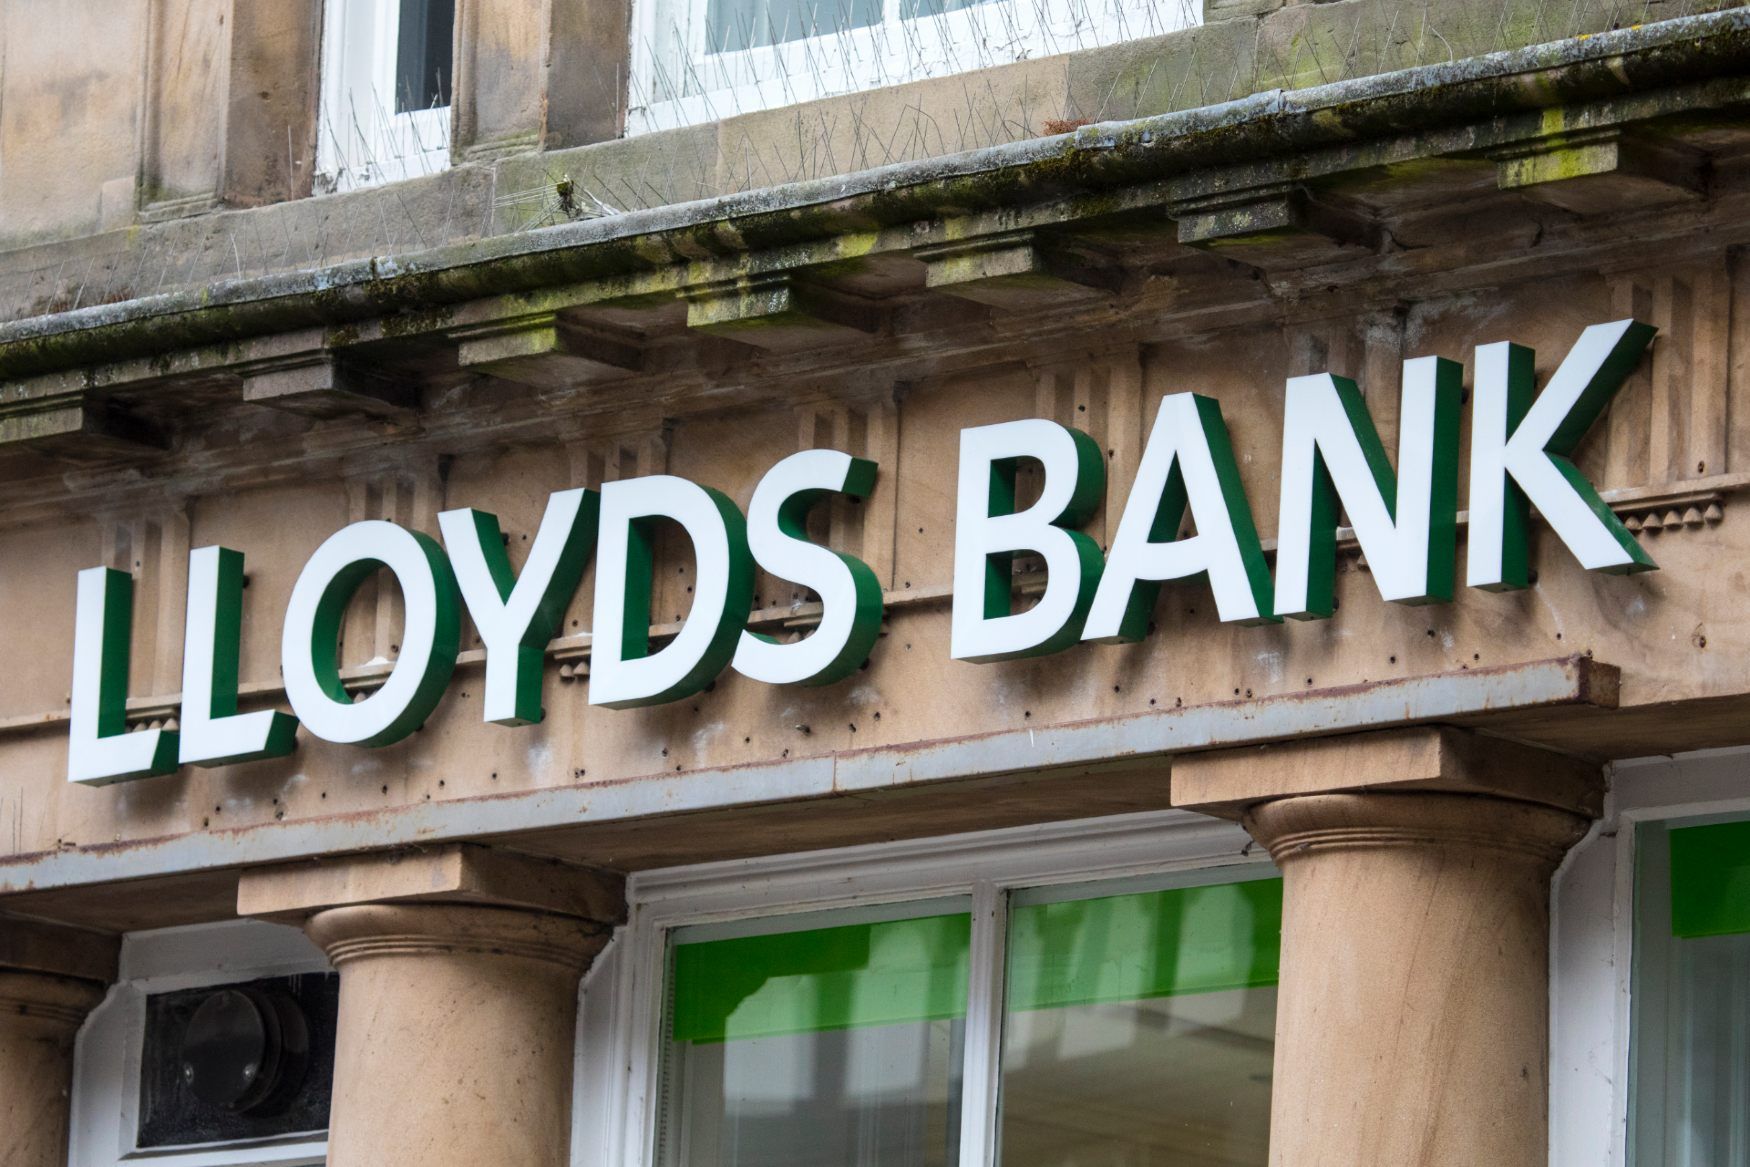 Lloyds Bank sign above door